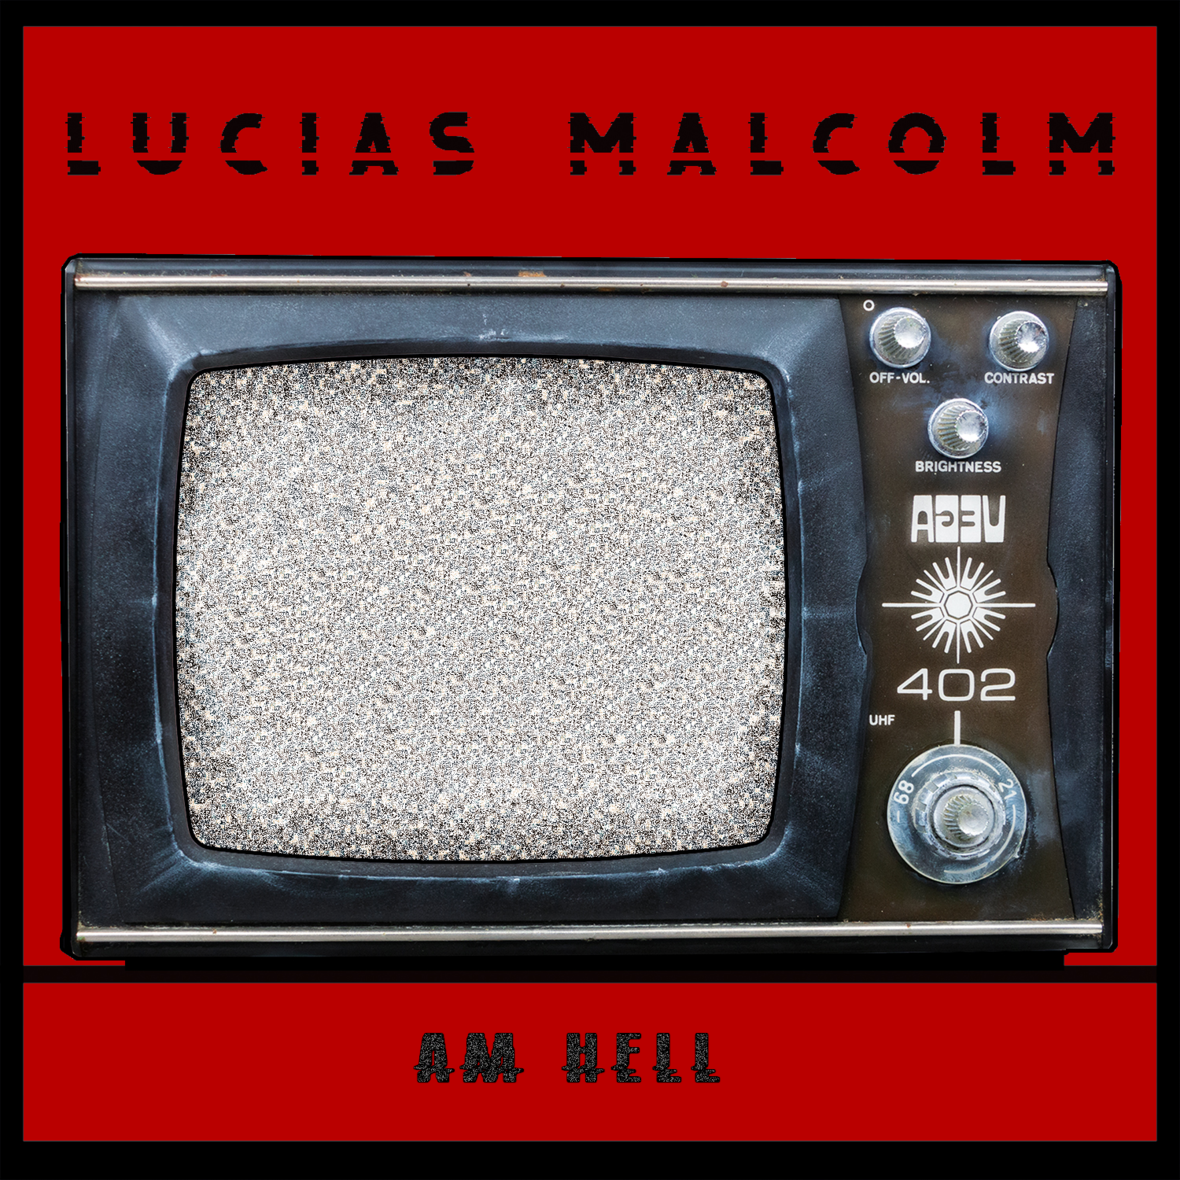 Lucias Malcolm - Am Hell - Single Art